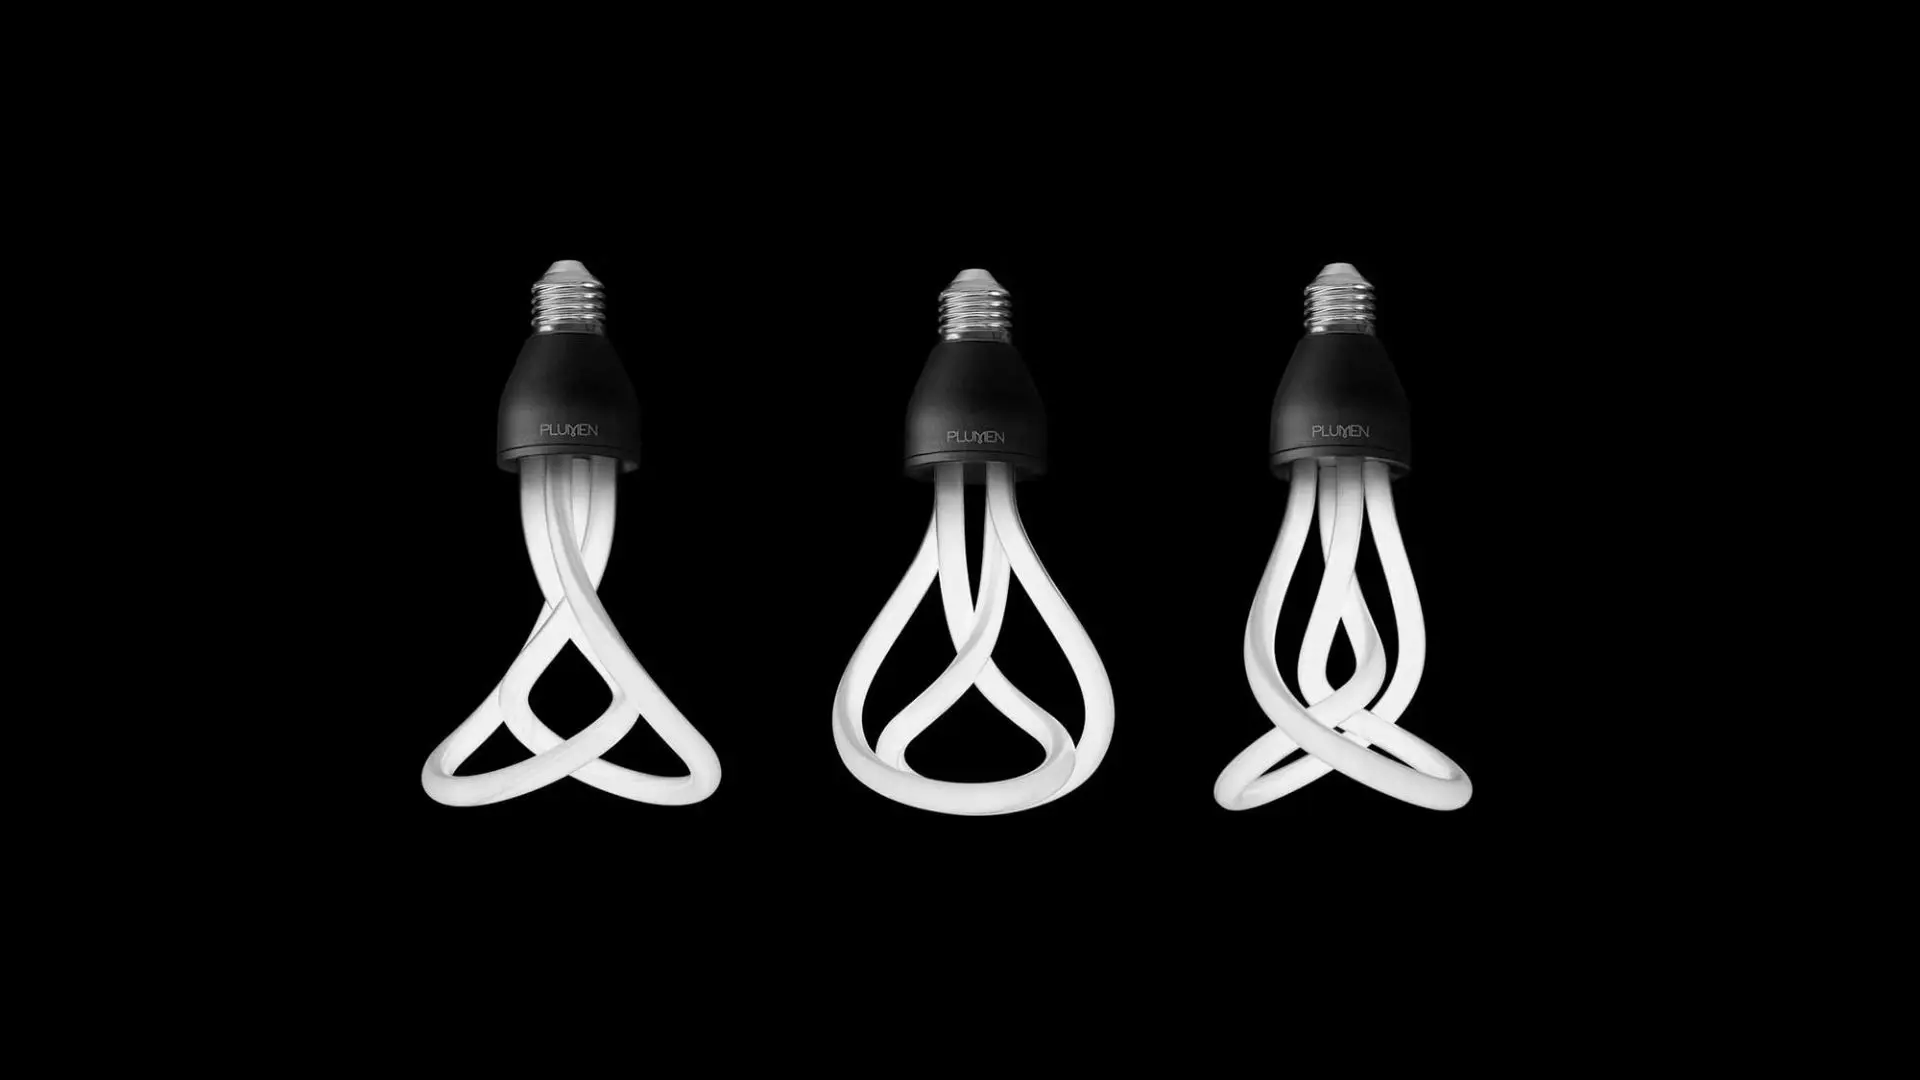 5 original bulb designs